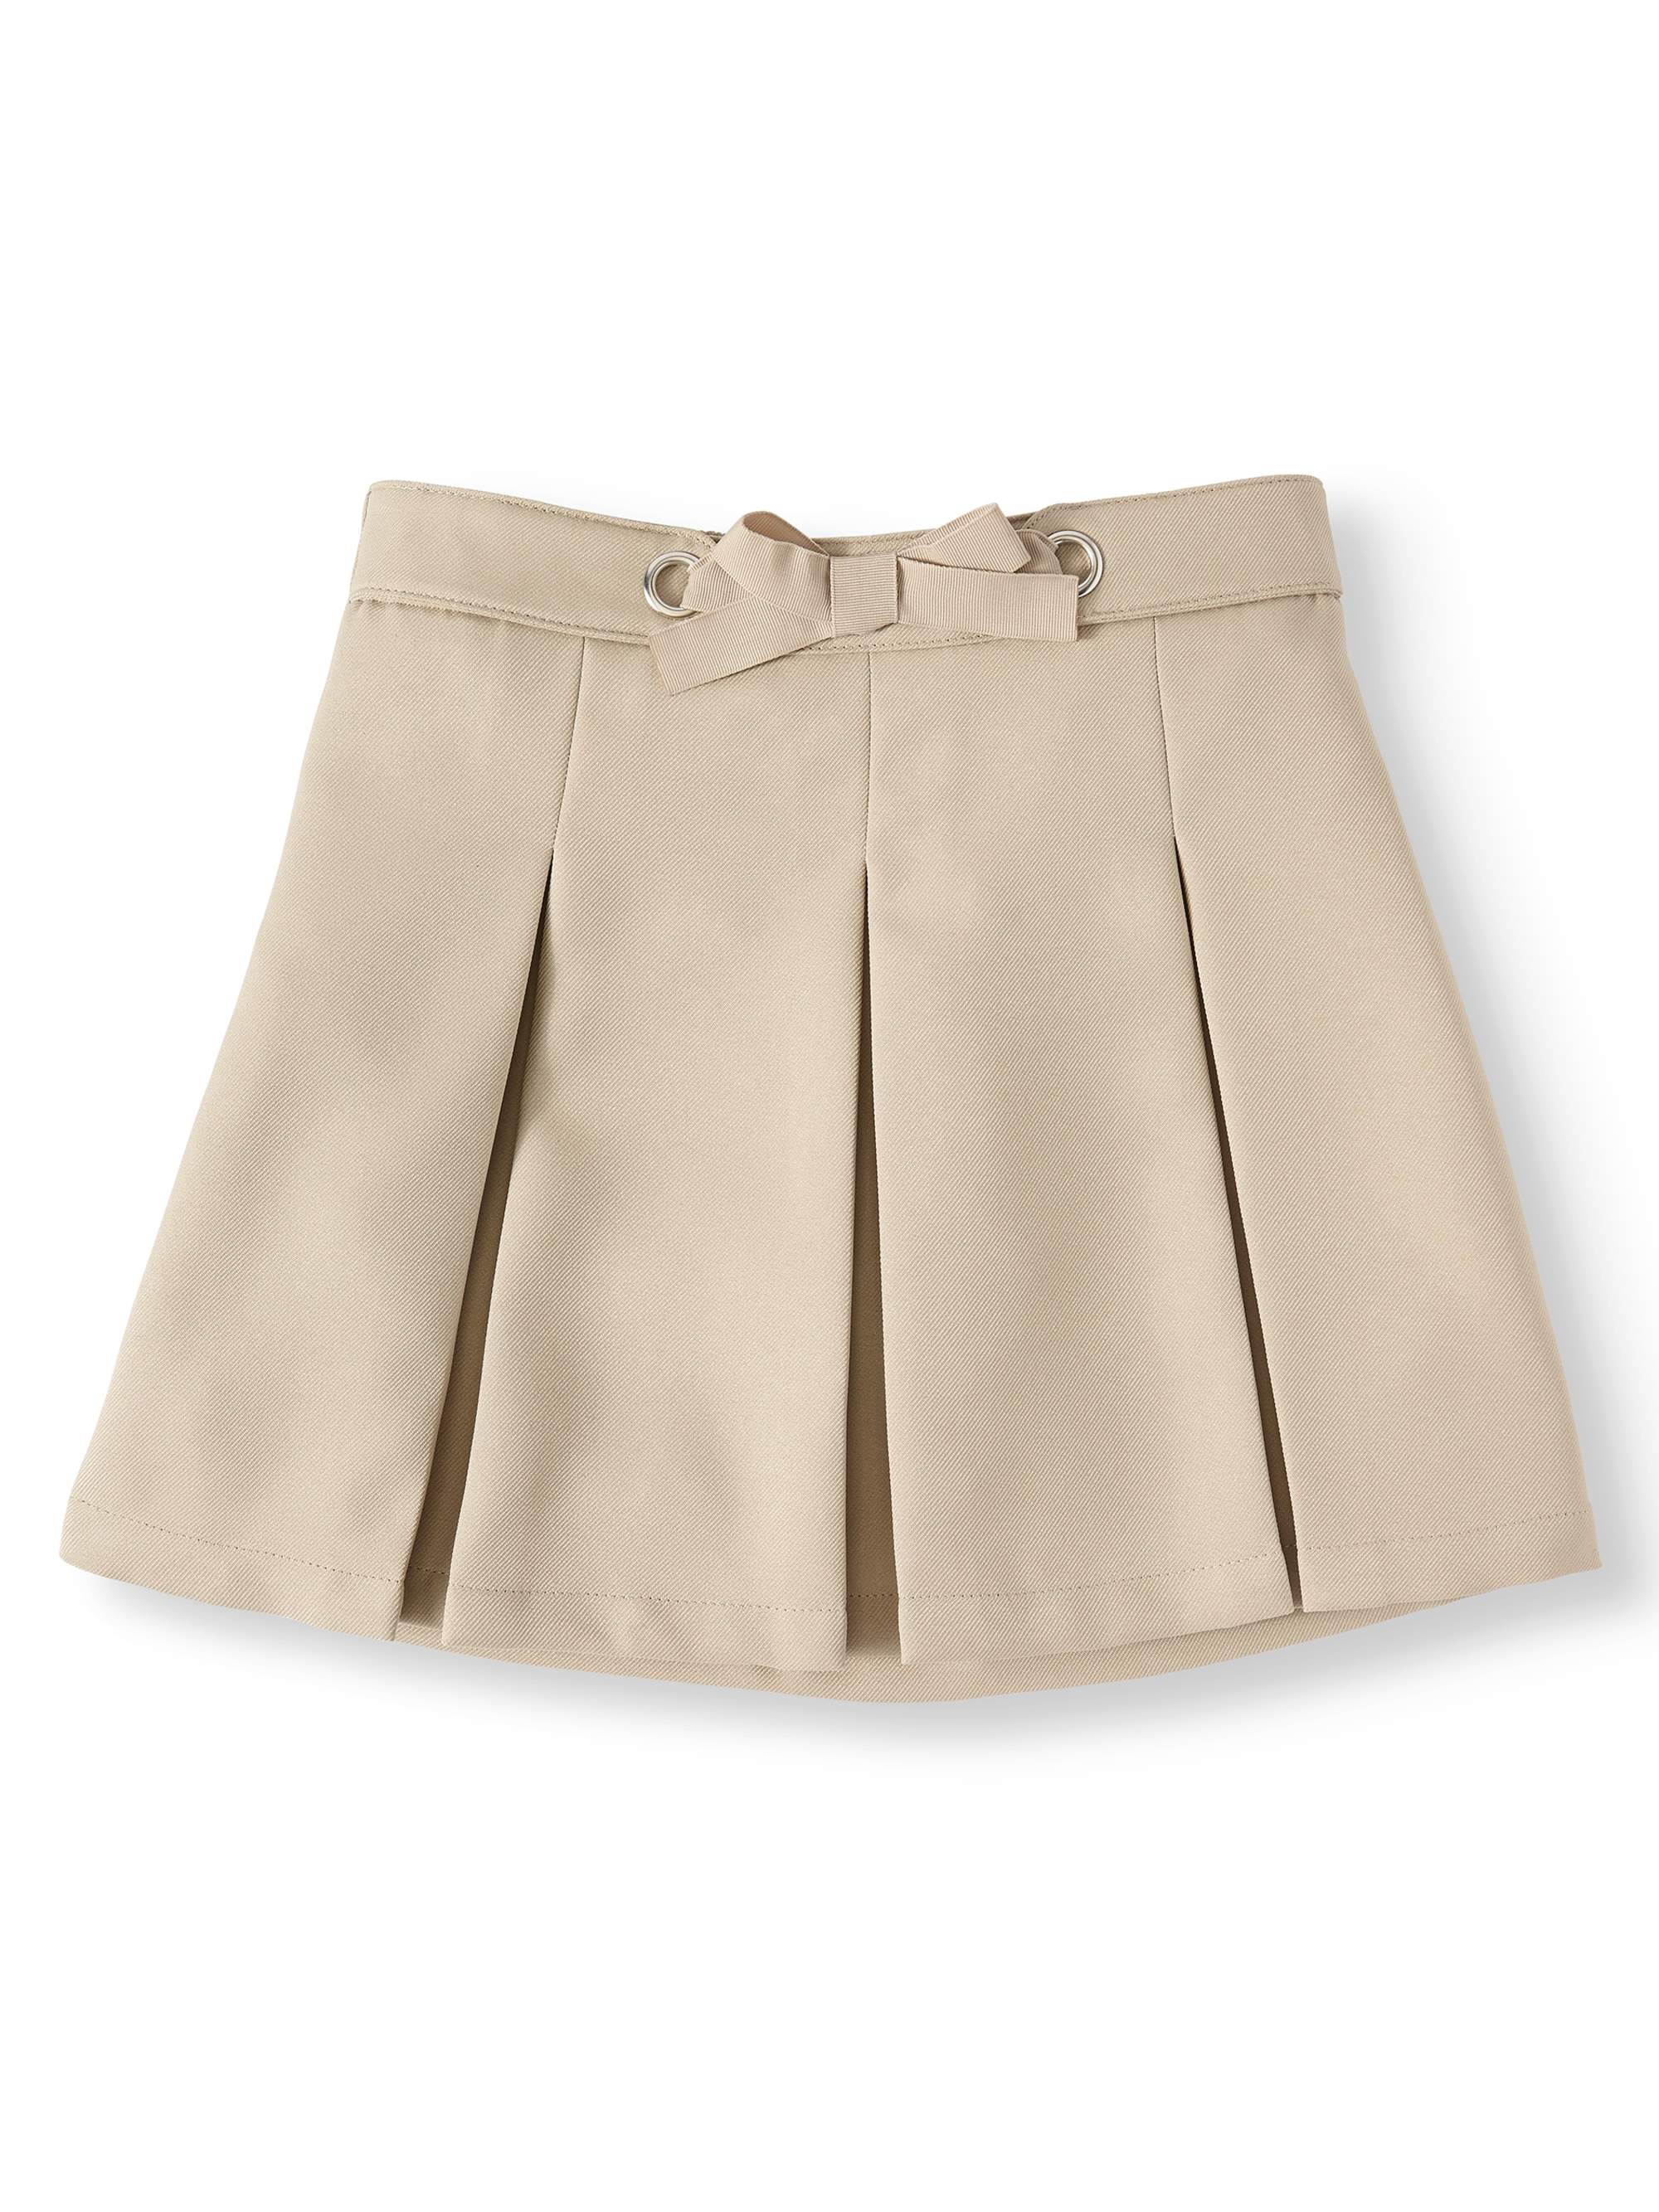 Wonder Nation Girls School Uniform Bow Scooter Skirt, Sizes 4-16 & Plus - image 1 of 3